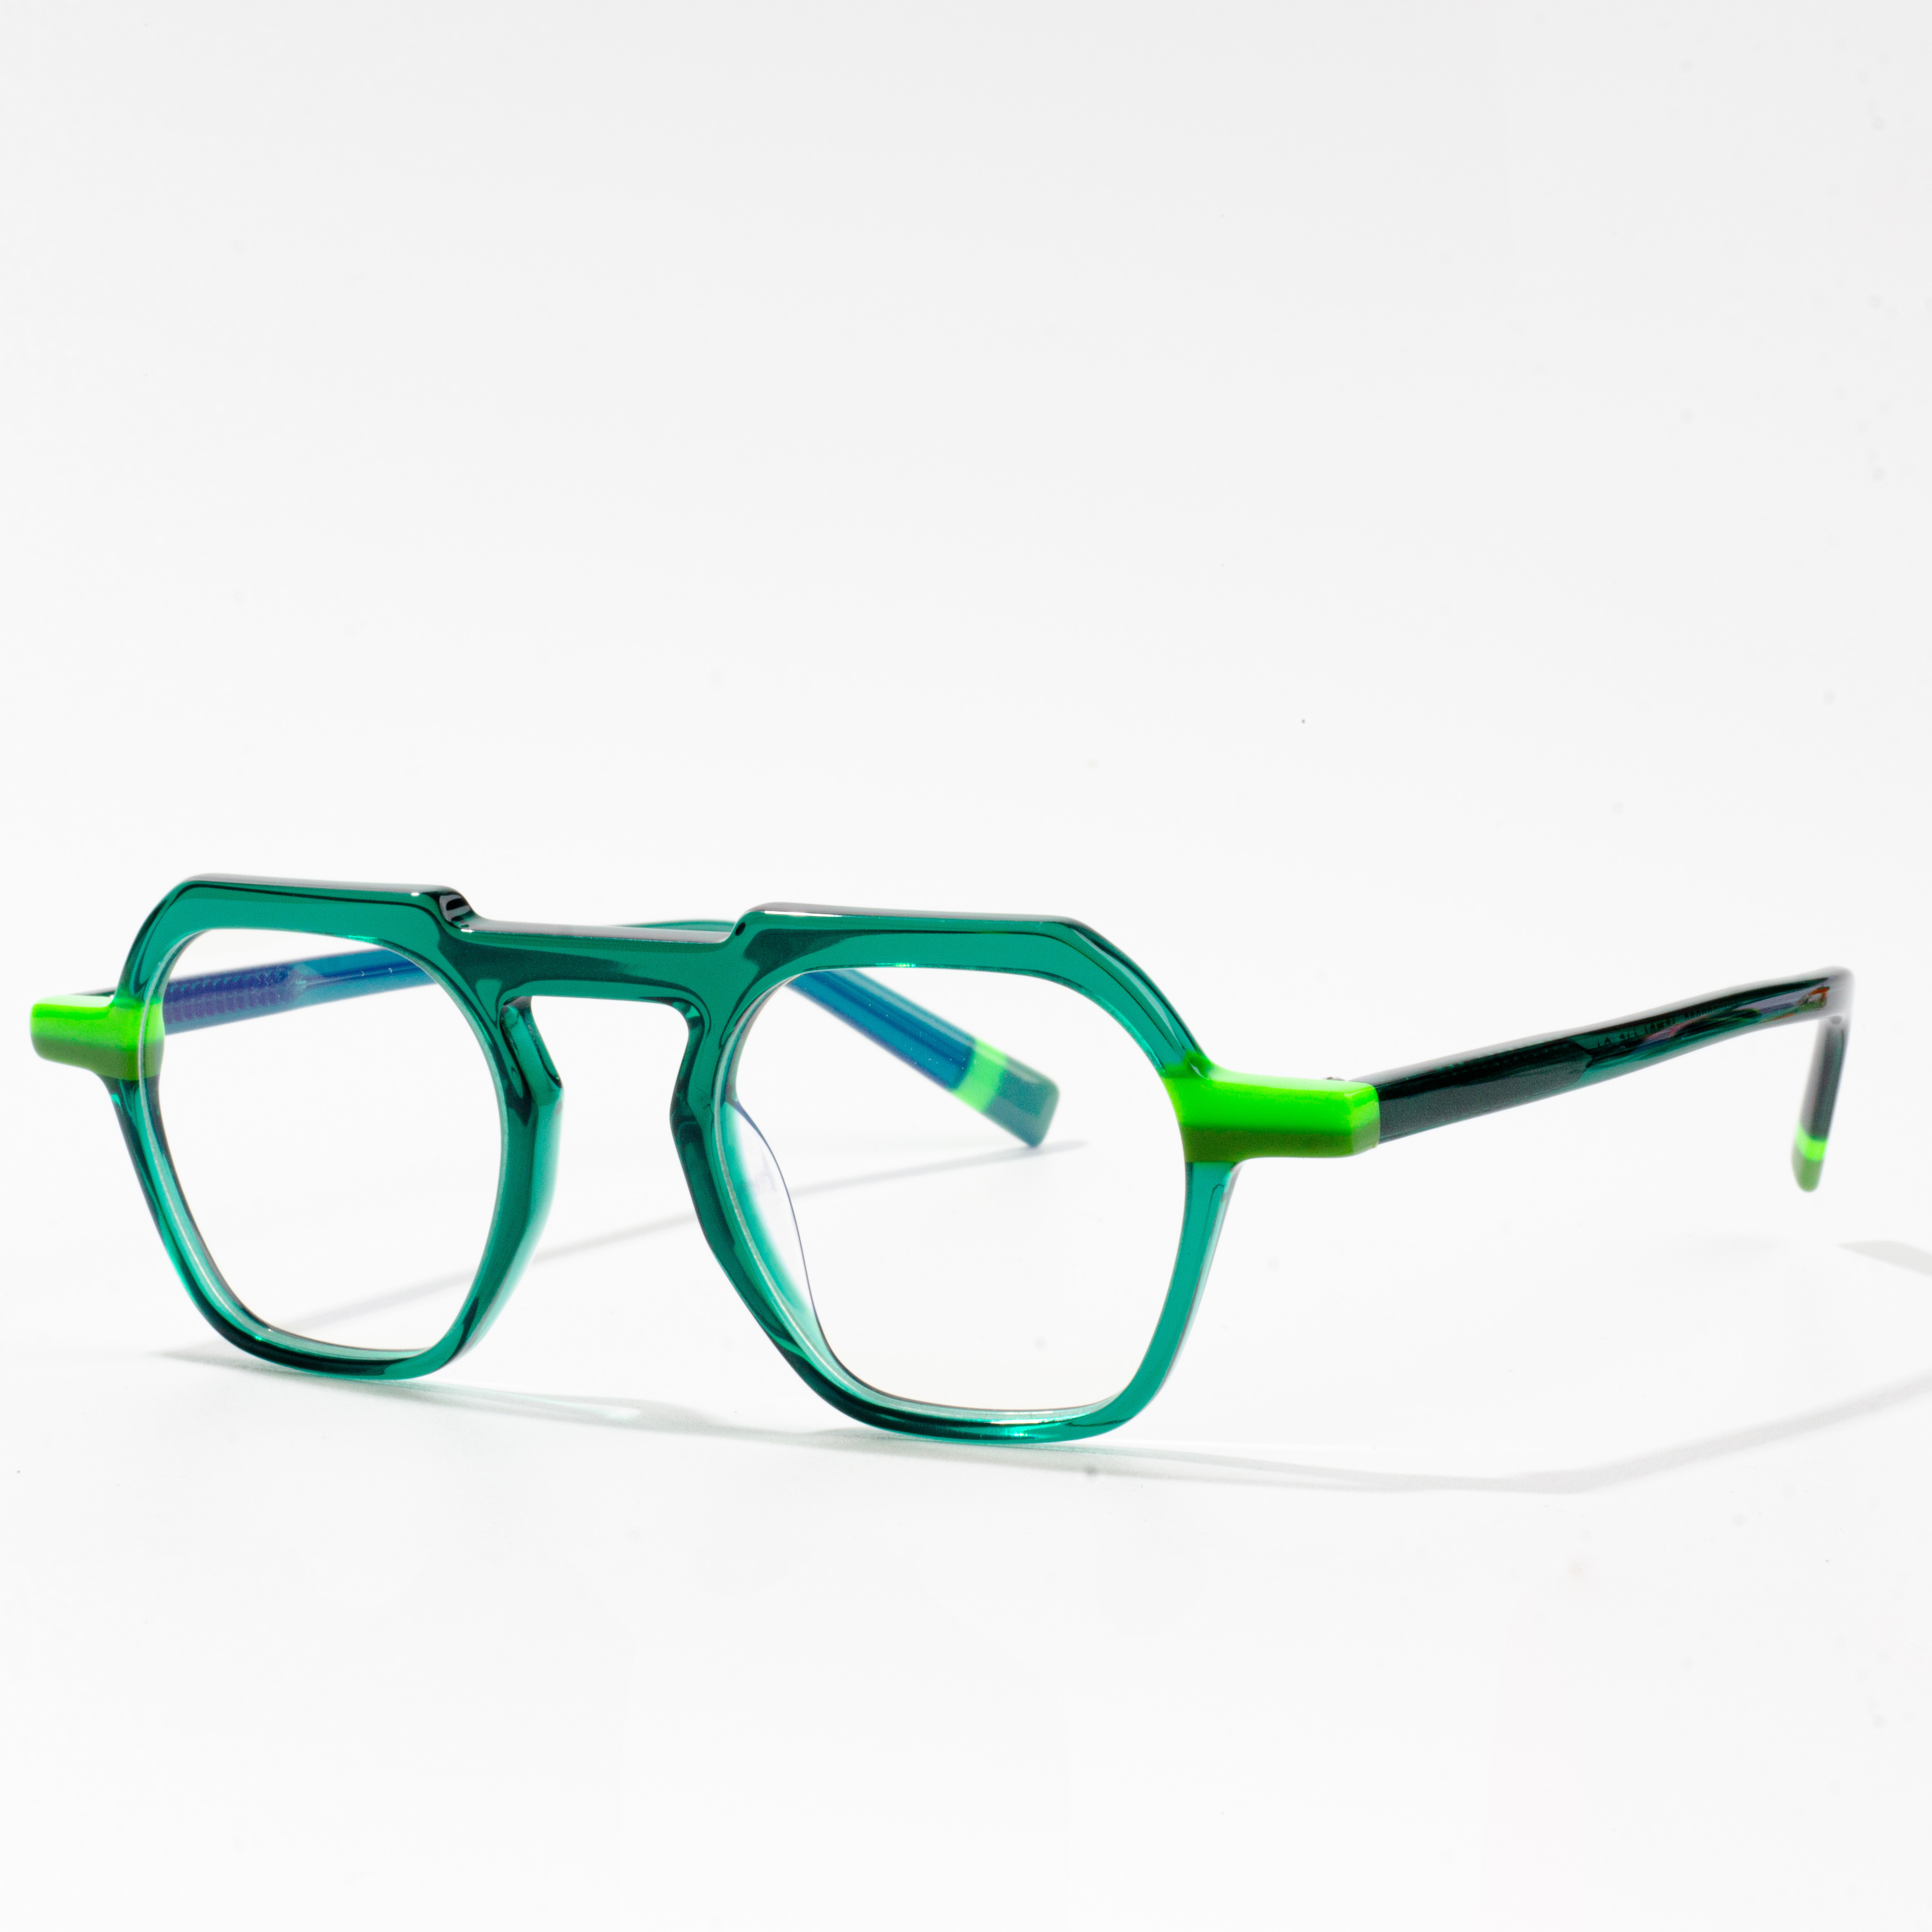 clear acetate glasses frames